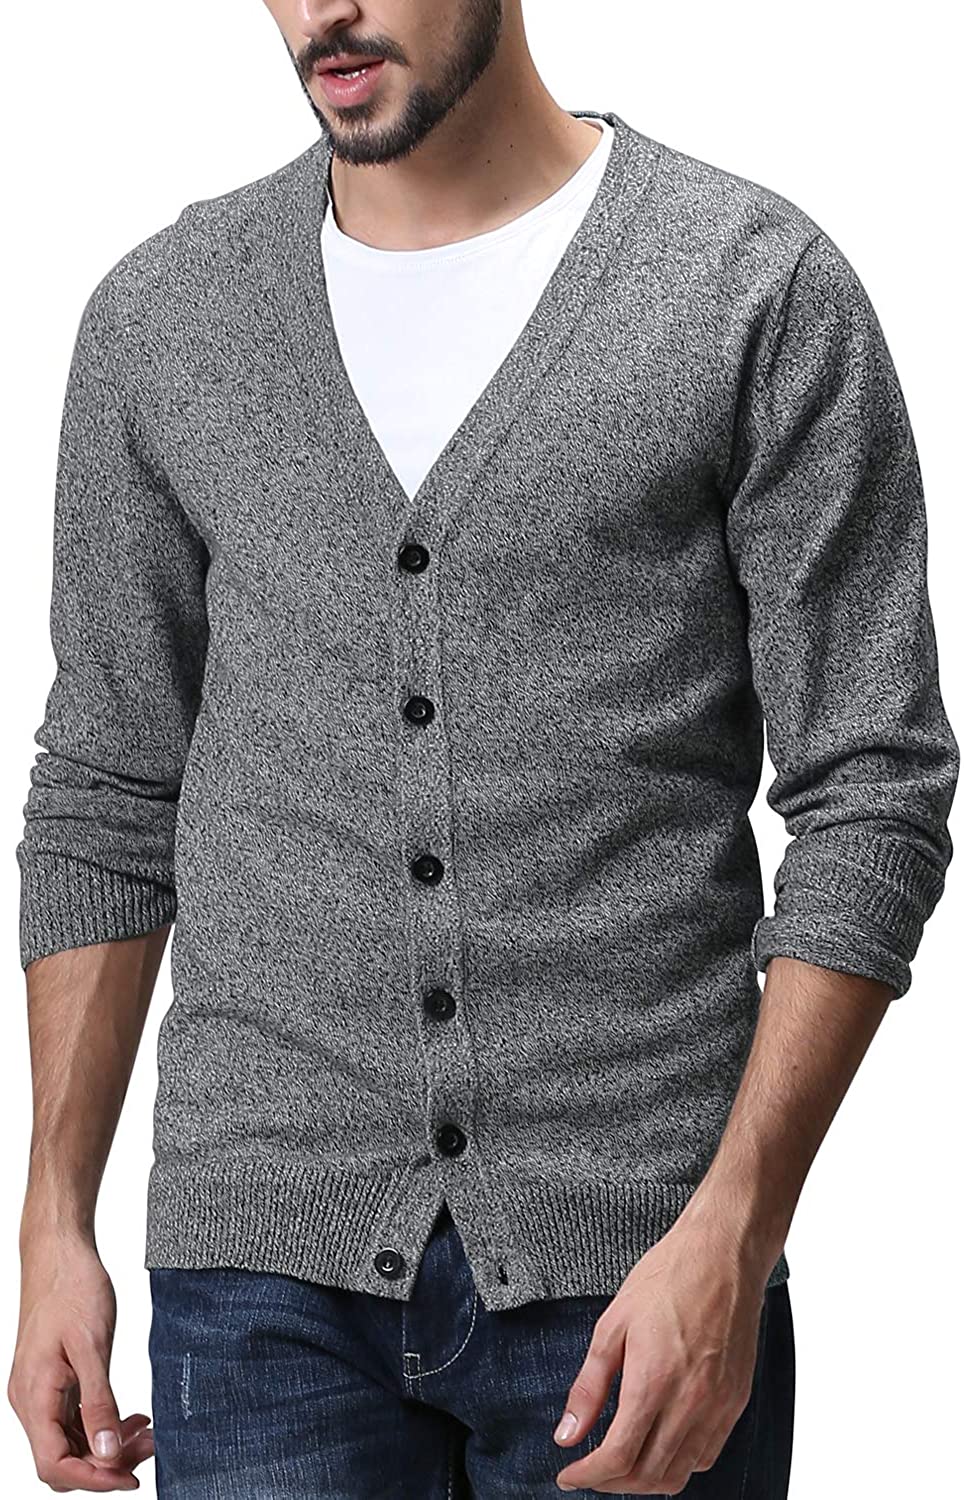 Match Men's K|G Series Shawl Collar Cardigan Sweater | eBay